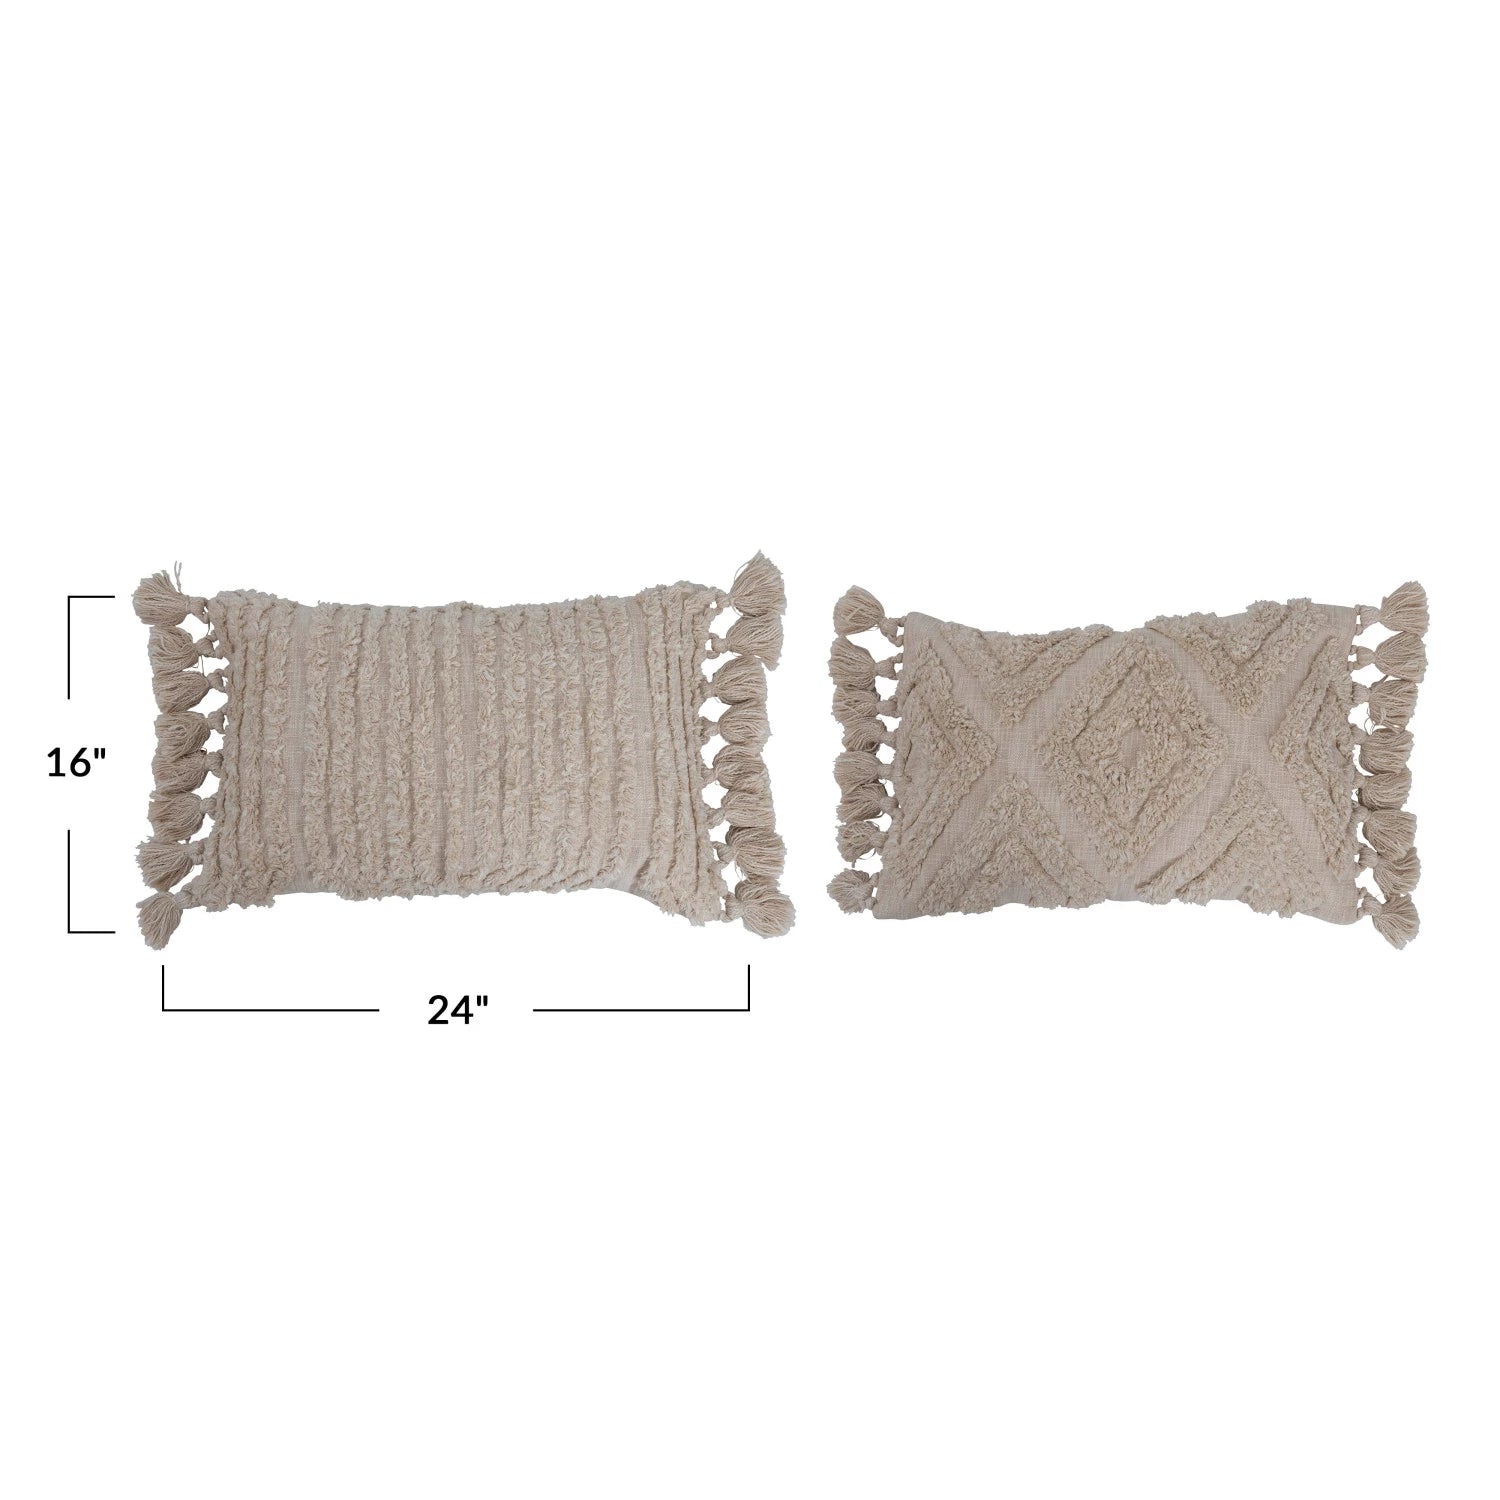 24" x 16" Woven Cotton Slub Lumbar Pillow w/ Tufted Design & Tassels, 2 Styles, Polyester Fill